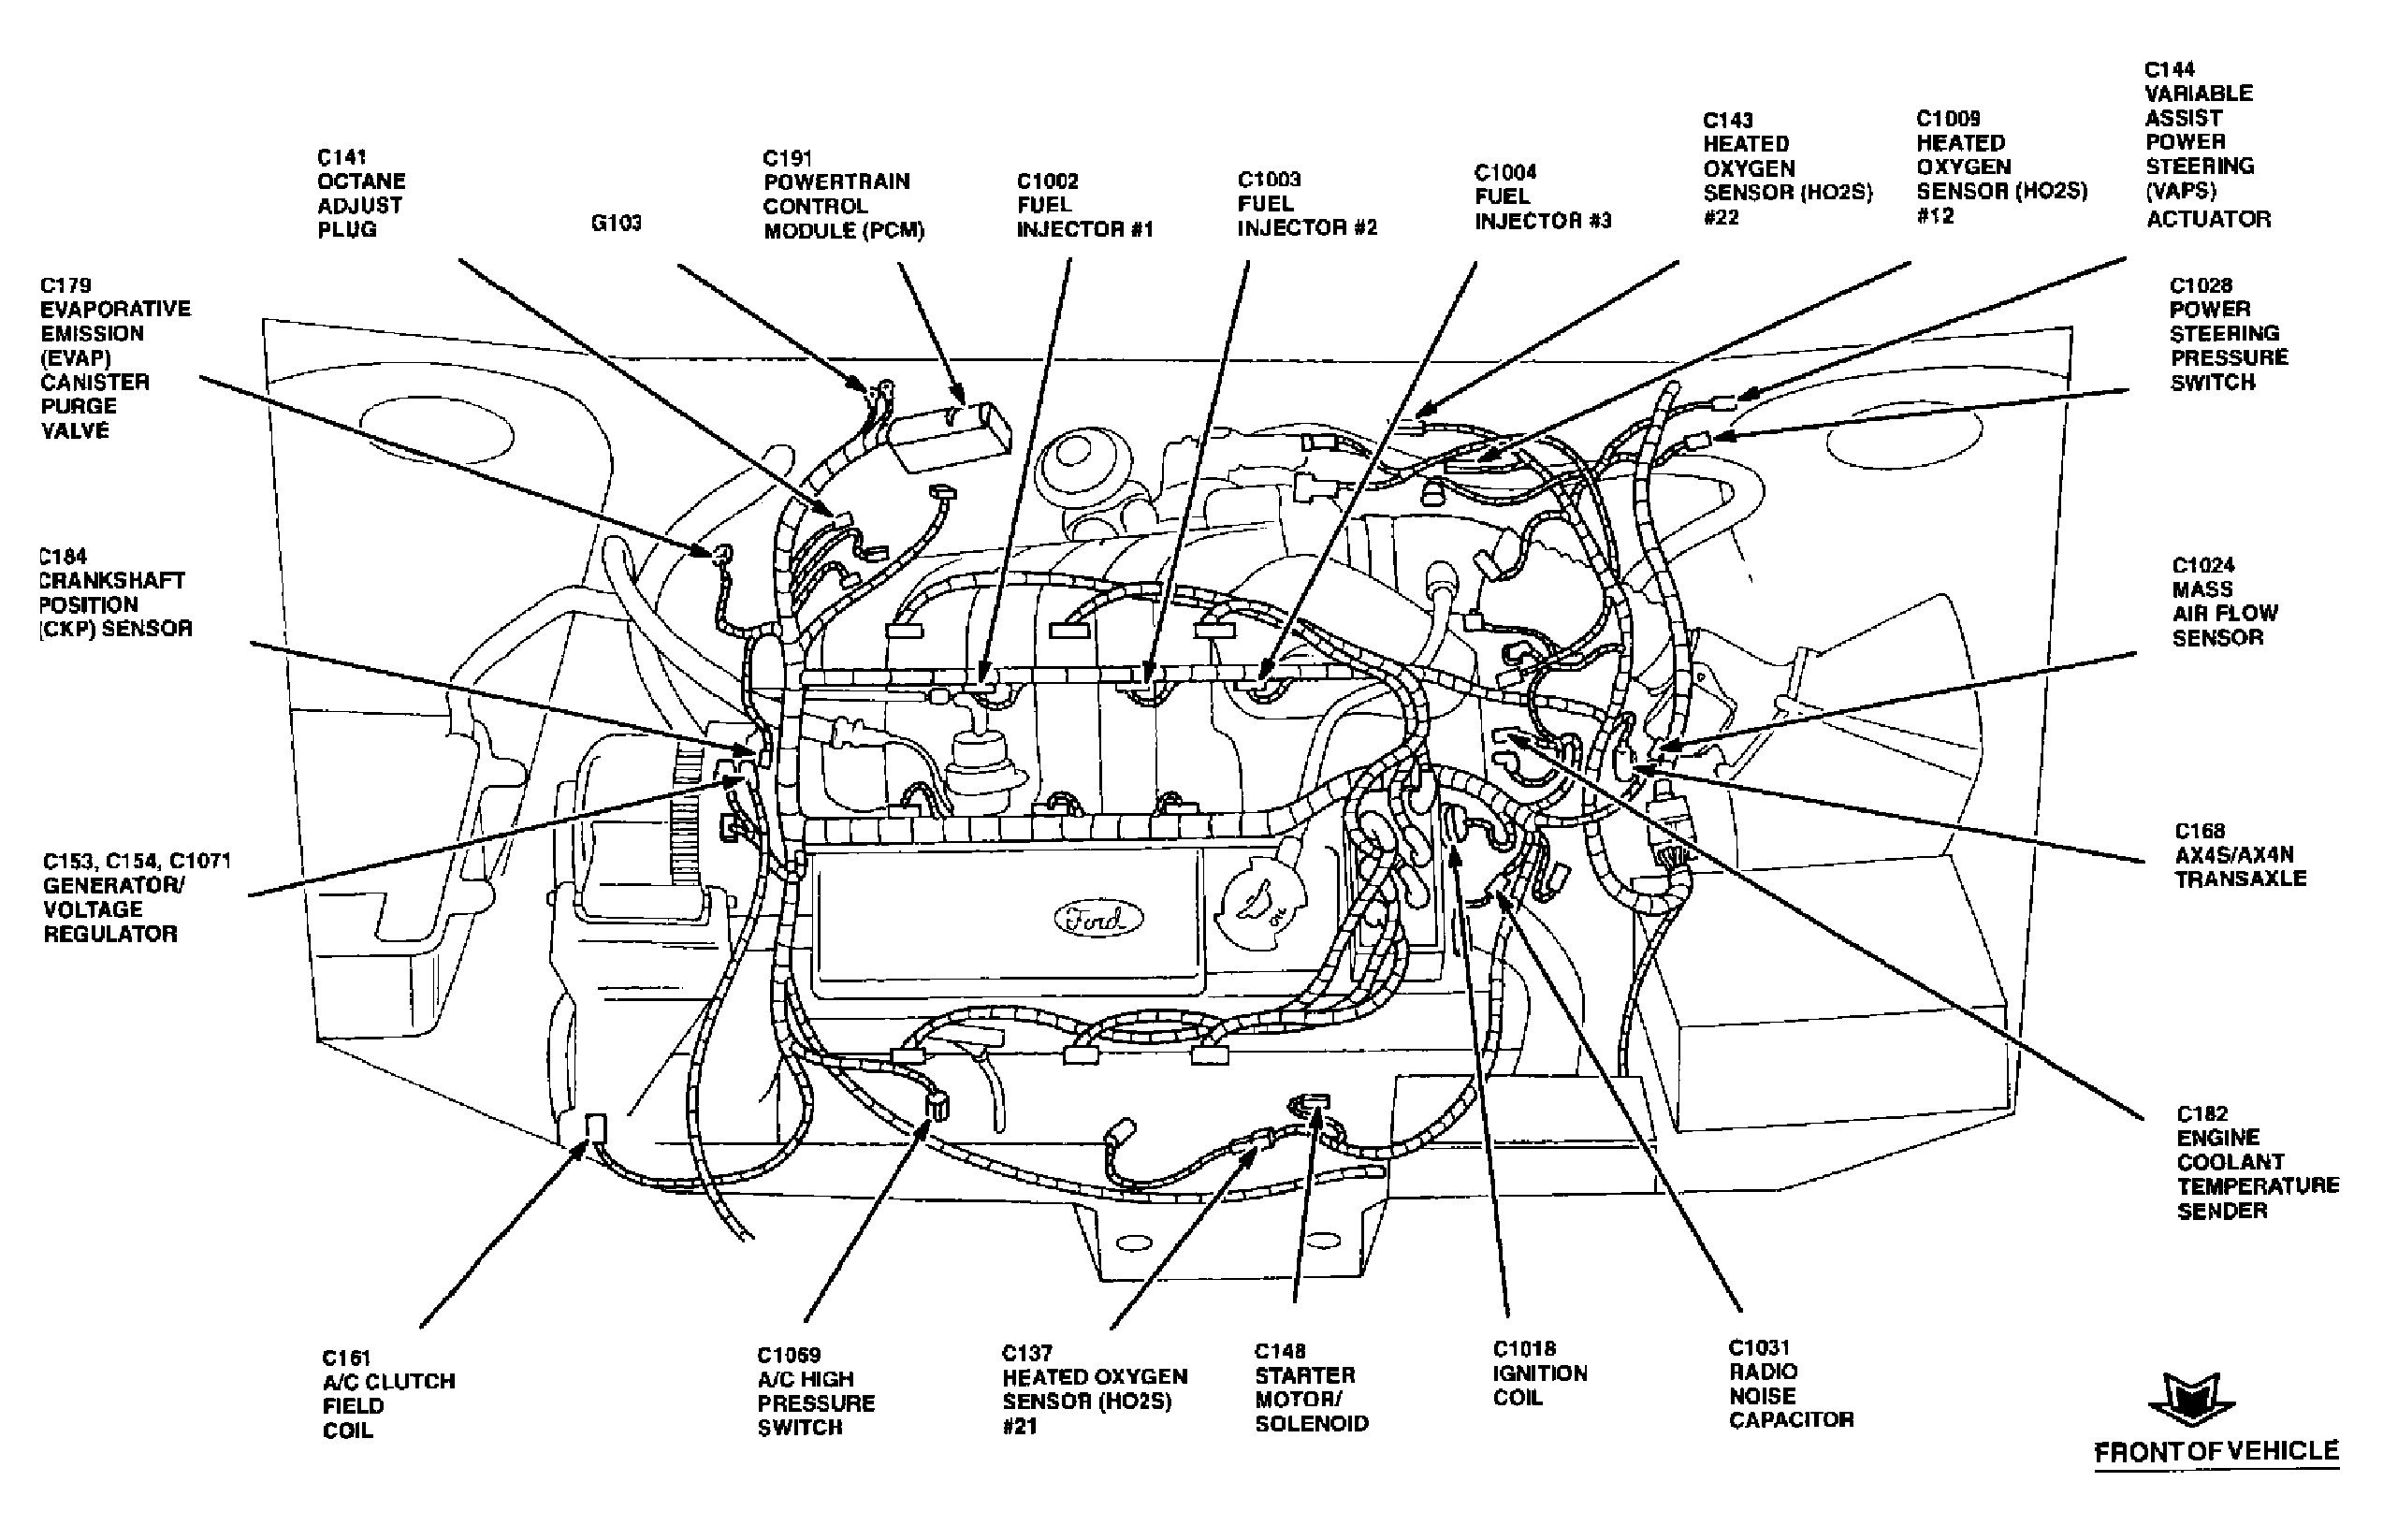 2011 Ford F150 Wiring Diagram from schematron.org